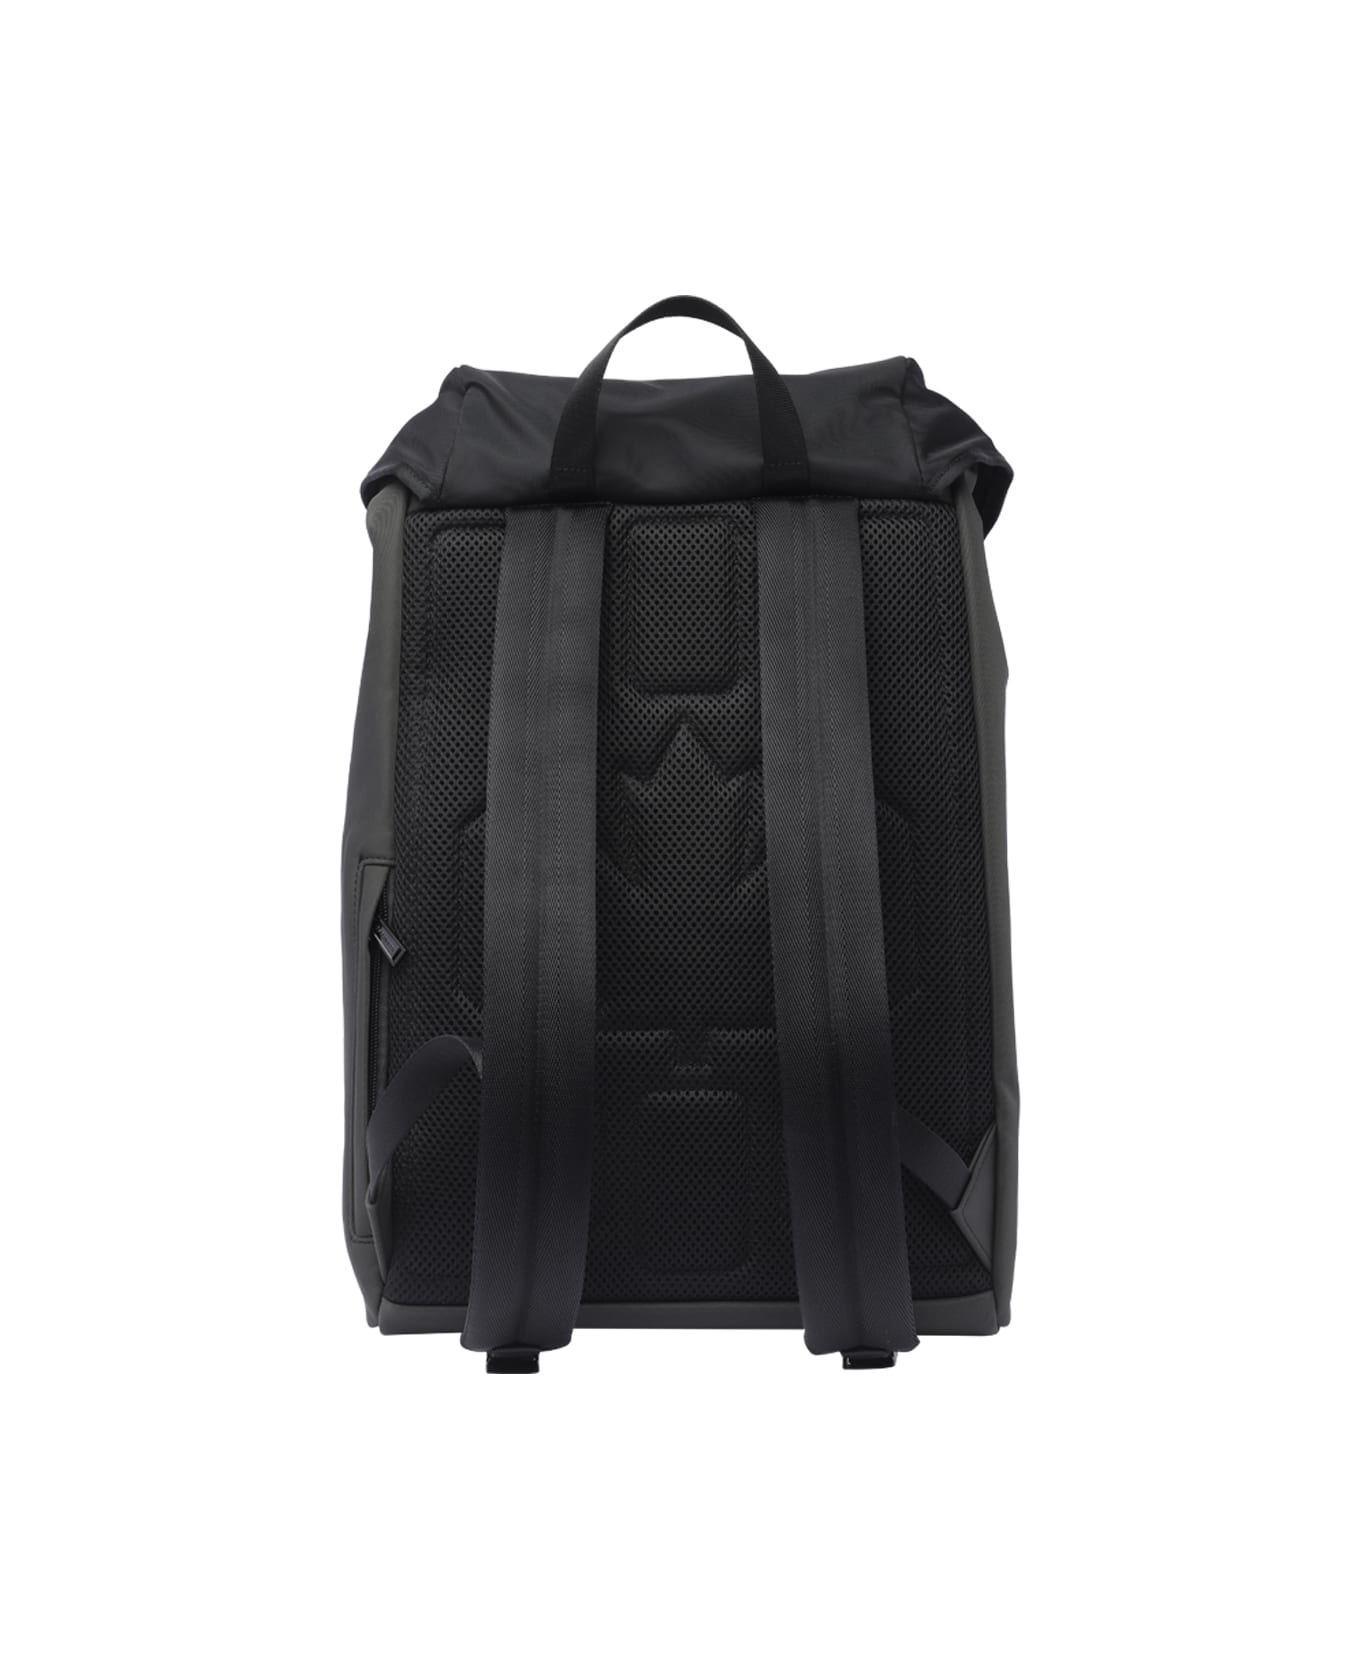 Dsquared2 Backpack With Logo - Grigio Scuro/nero